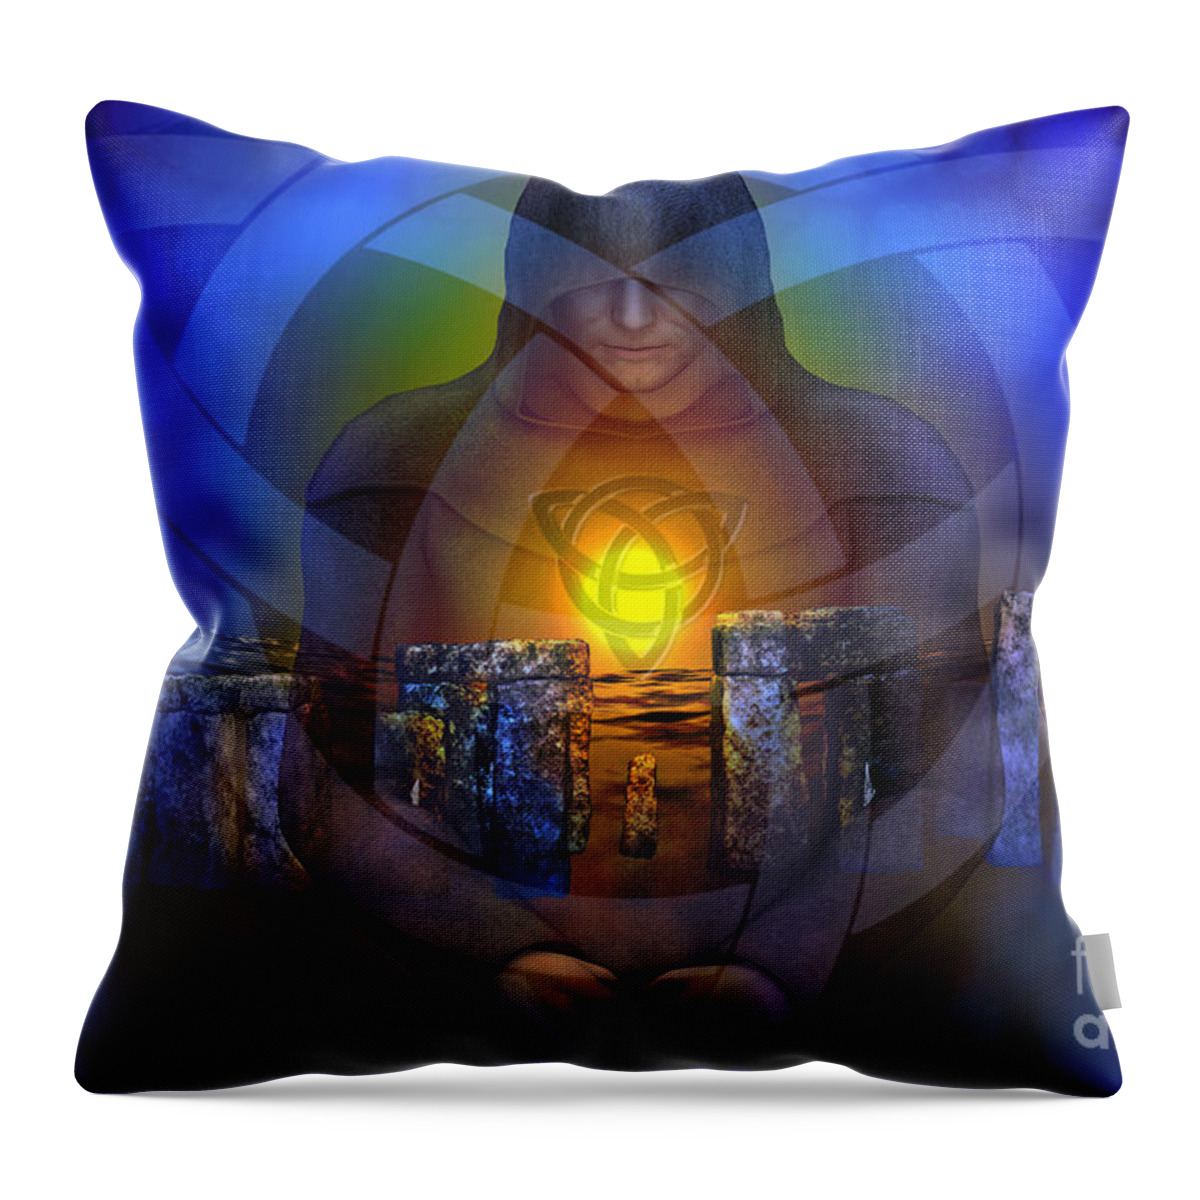 Druid Throw Pillow featuring the digital art The Druid by Shadowlea Is